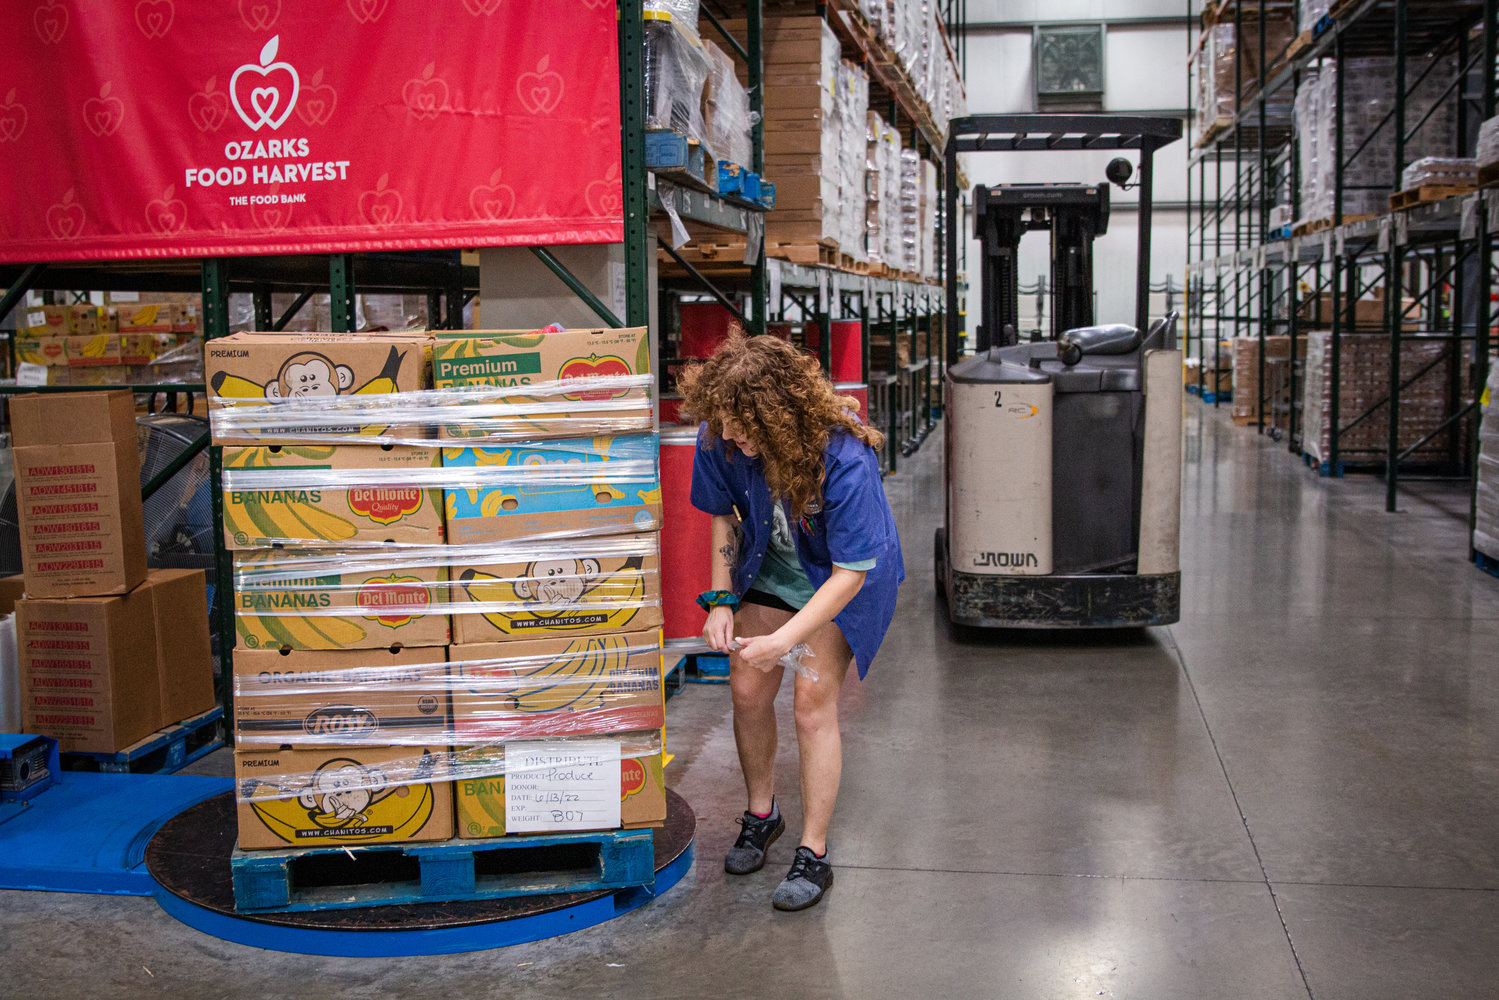 Ali Pool, volunteer coach at Ozarks Food Harvest, wraps a pallet of produce boxes.